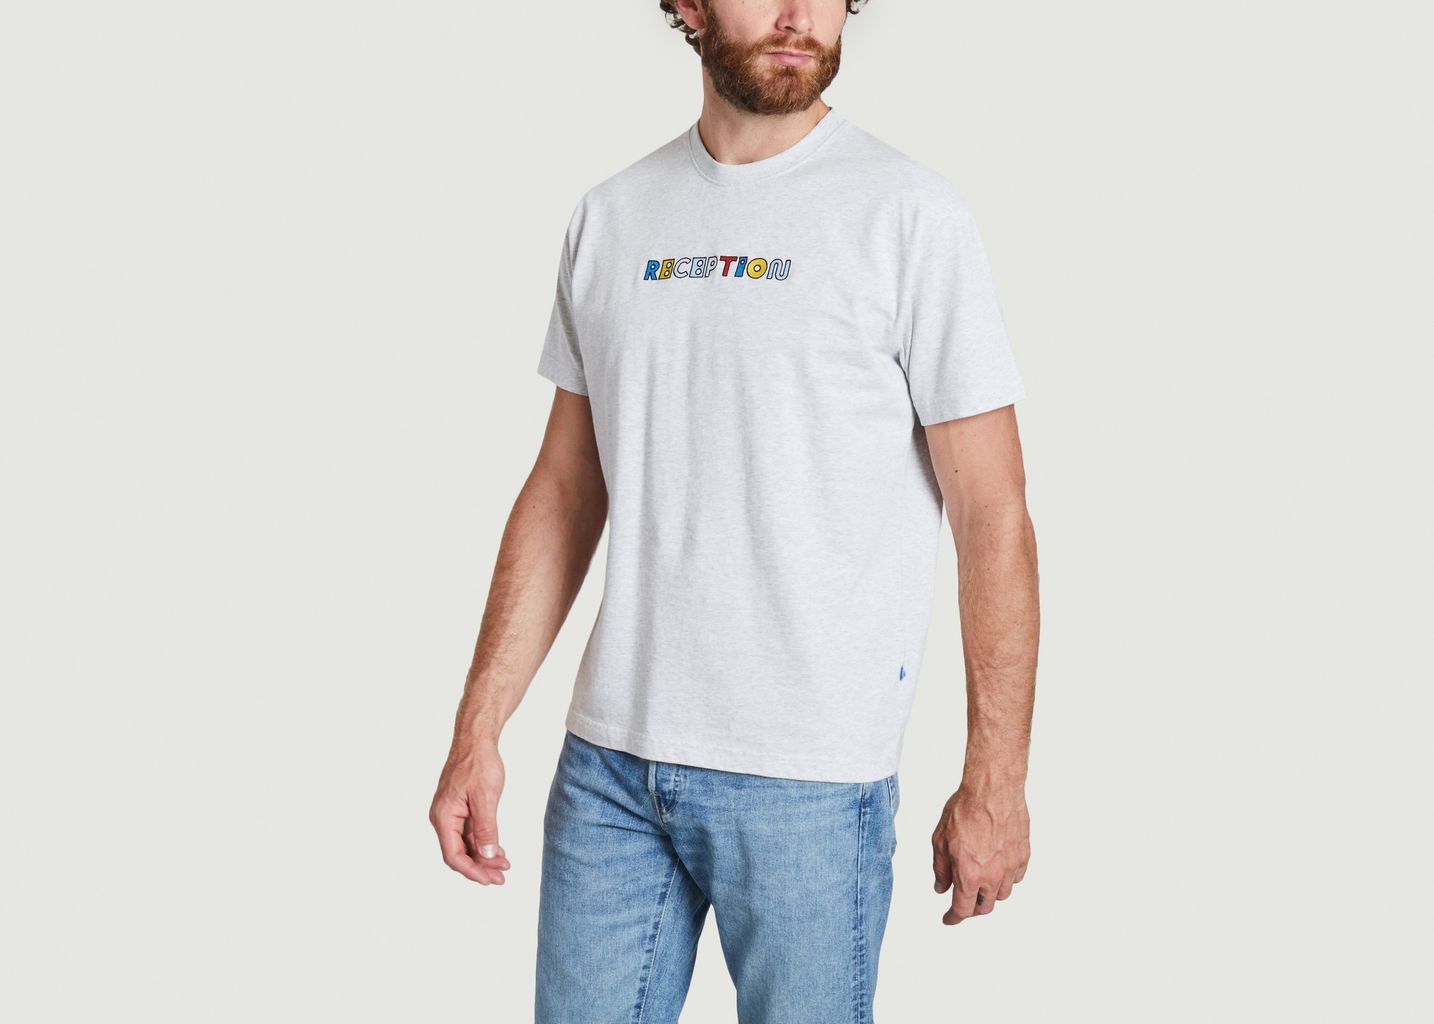 Motto T-shirt - Reception Clothing